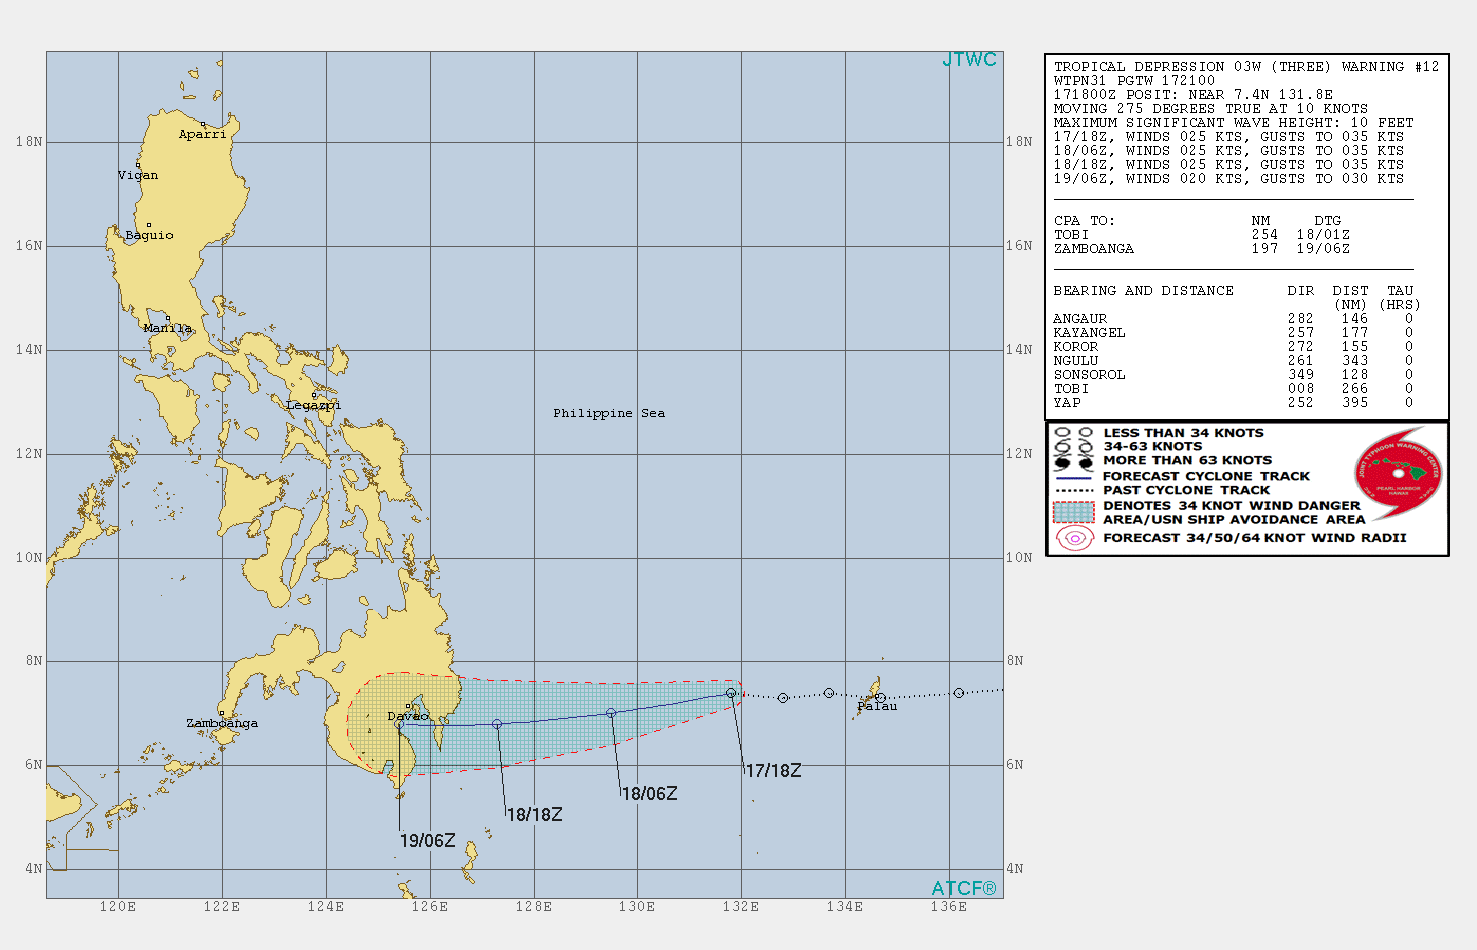 WARNING 12/JTWC